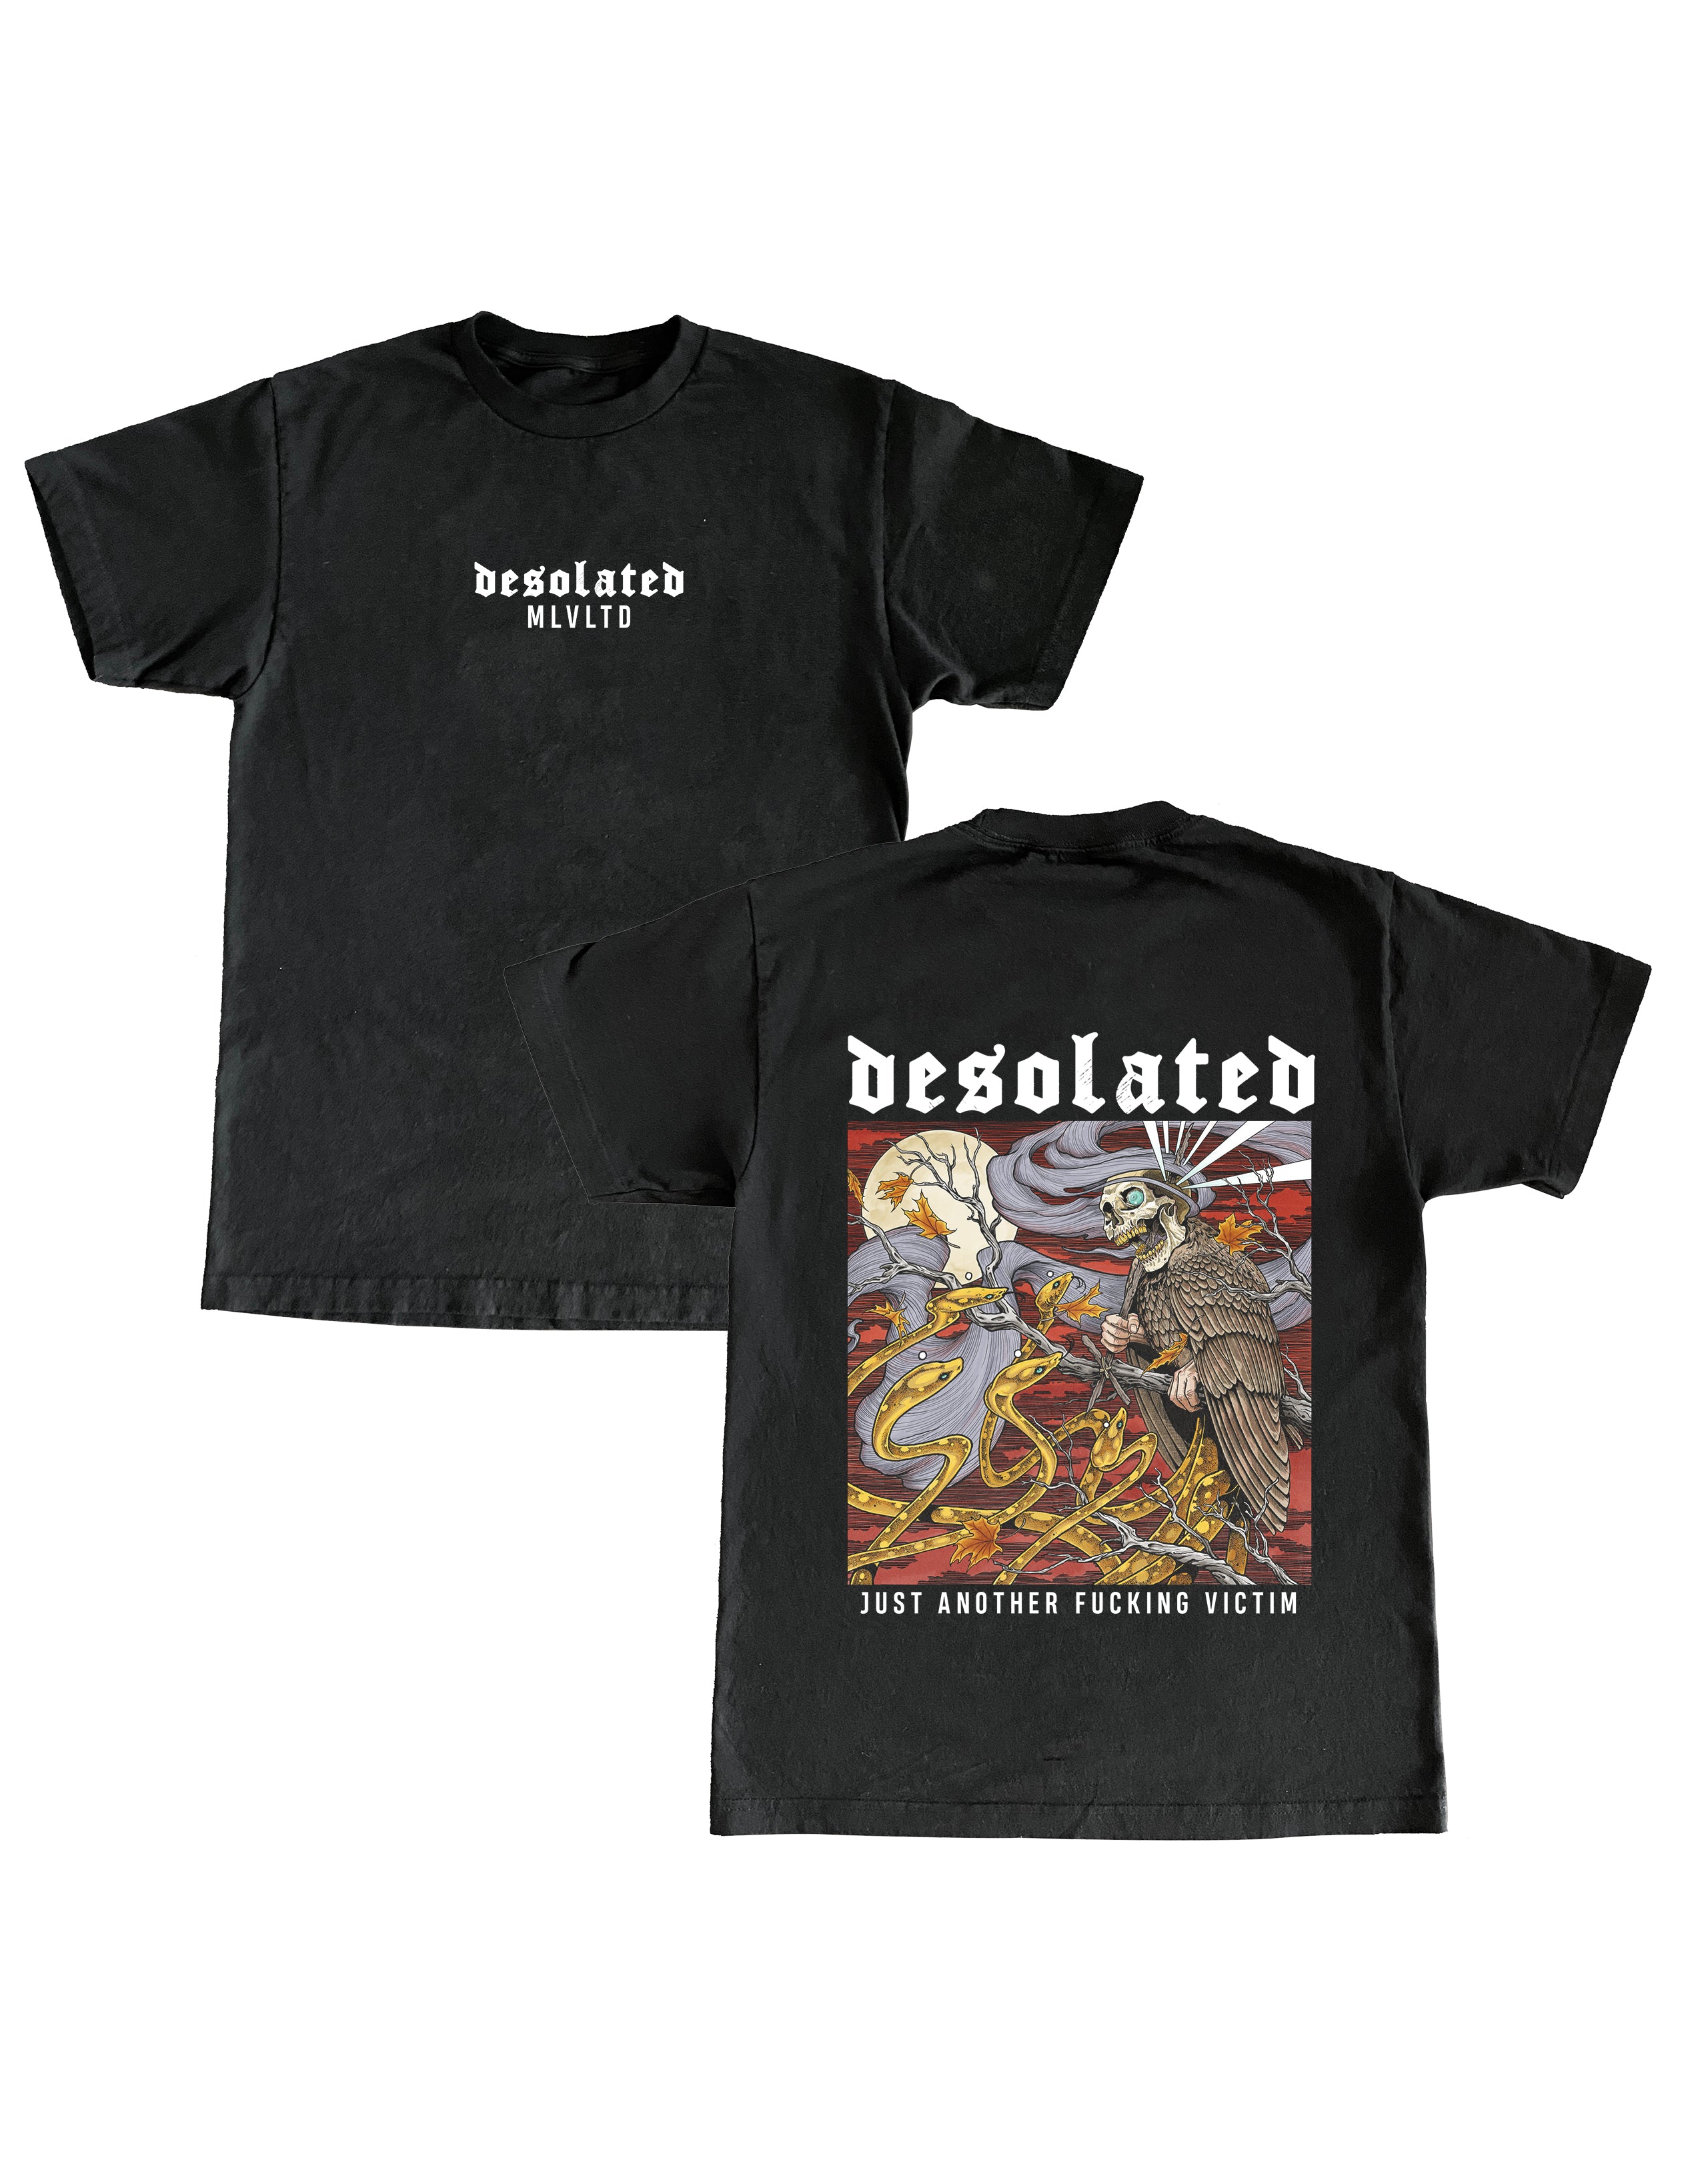 Desolated - Victim T-Shirt